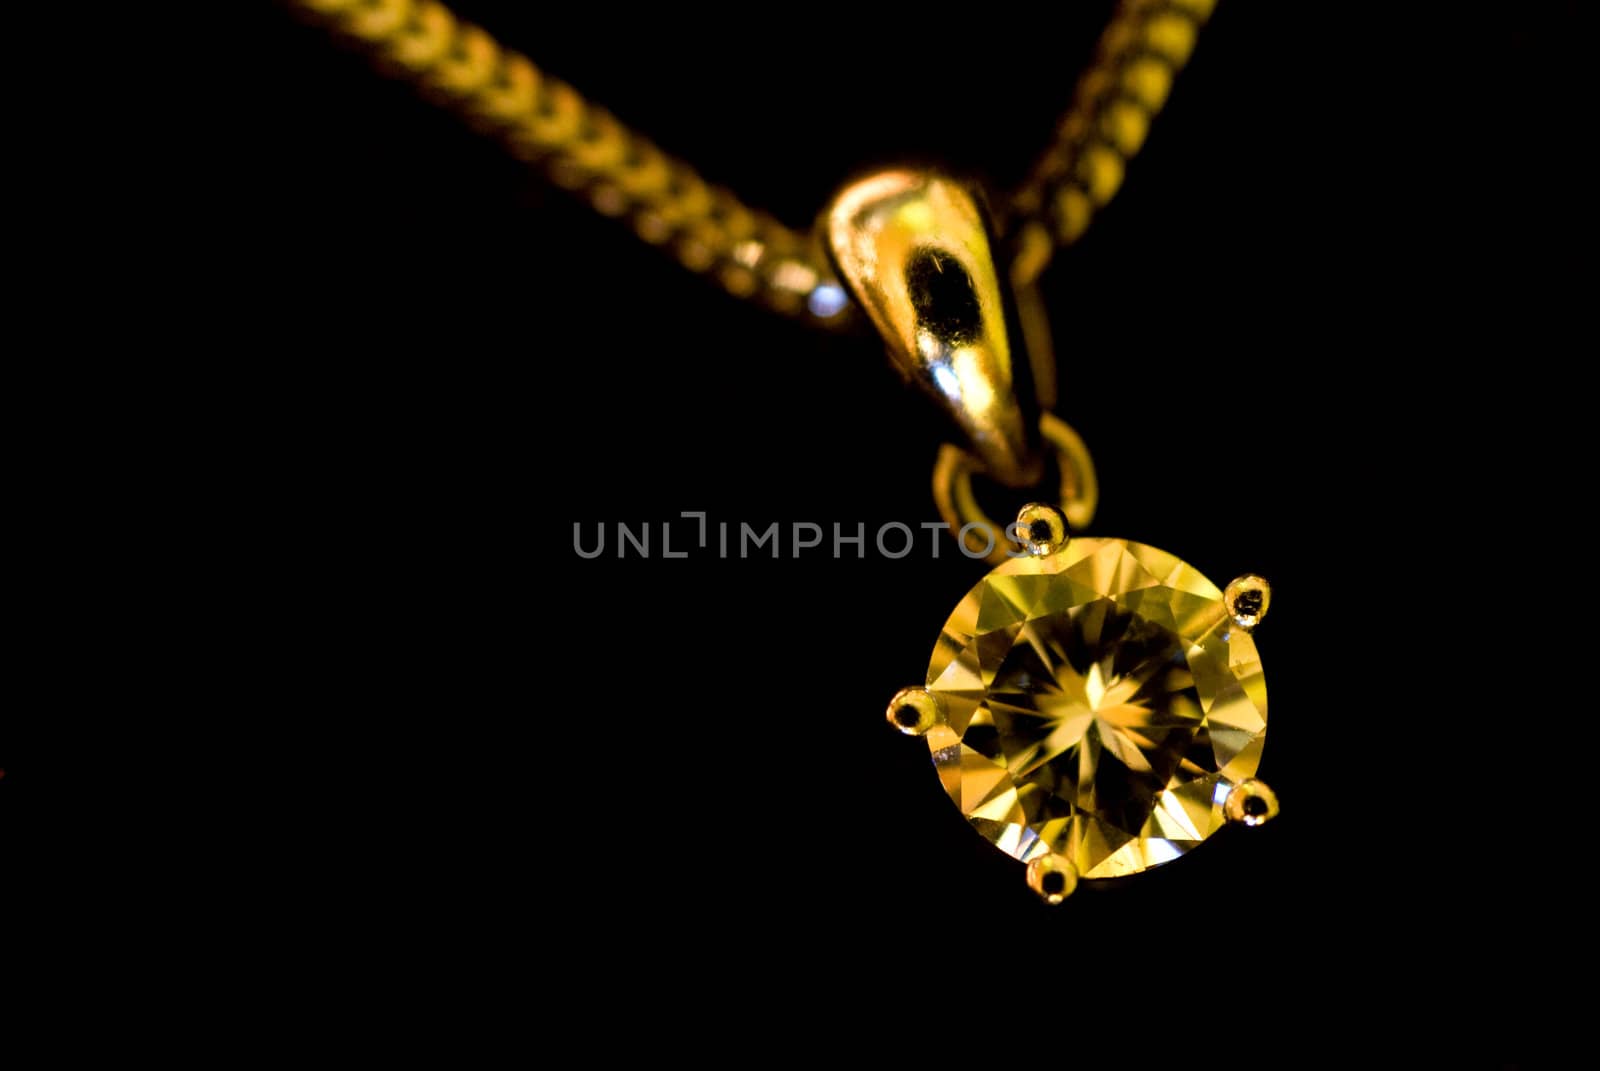 Still life of a diamond pendant on a necklace on a black surface